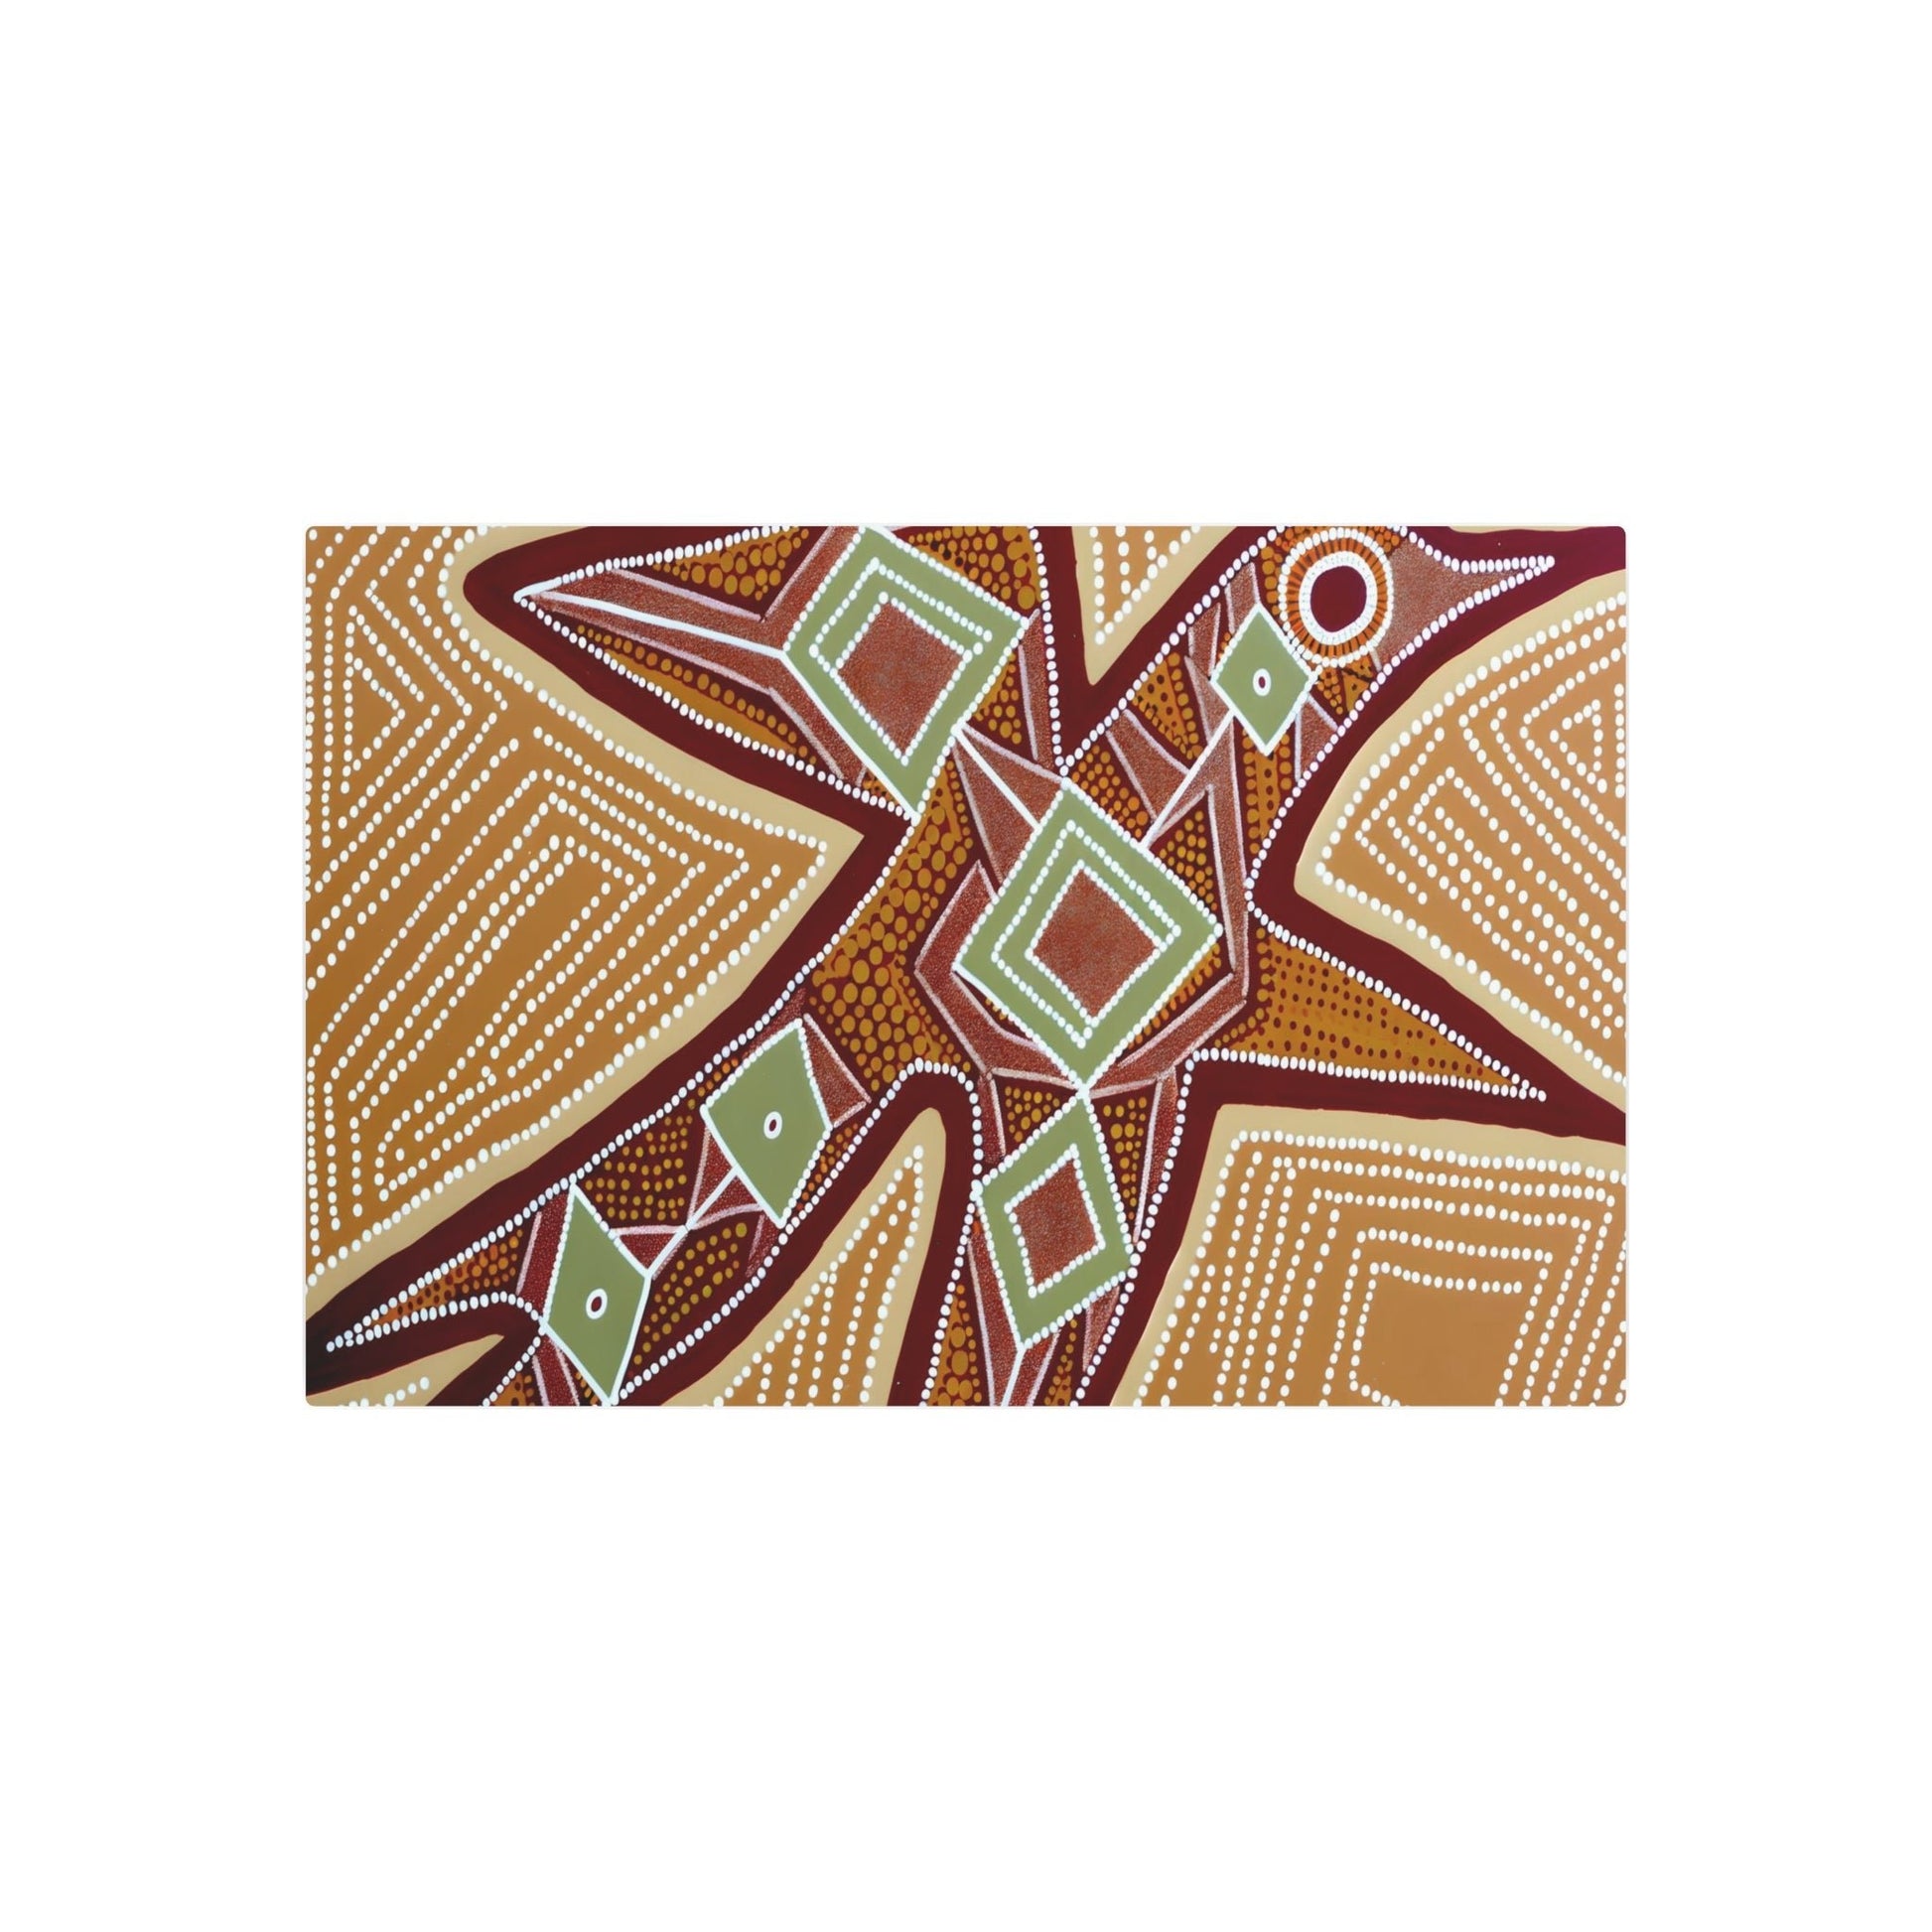 Metal Poster Art | "Australian Aboriginal Art Inspired Bird Image - Dot Painting & Earth-Tone Patterns in Non-Western & Global Styles" - Metal Poster Art 36″ x 24″ (Horizontal) 0.12''